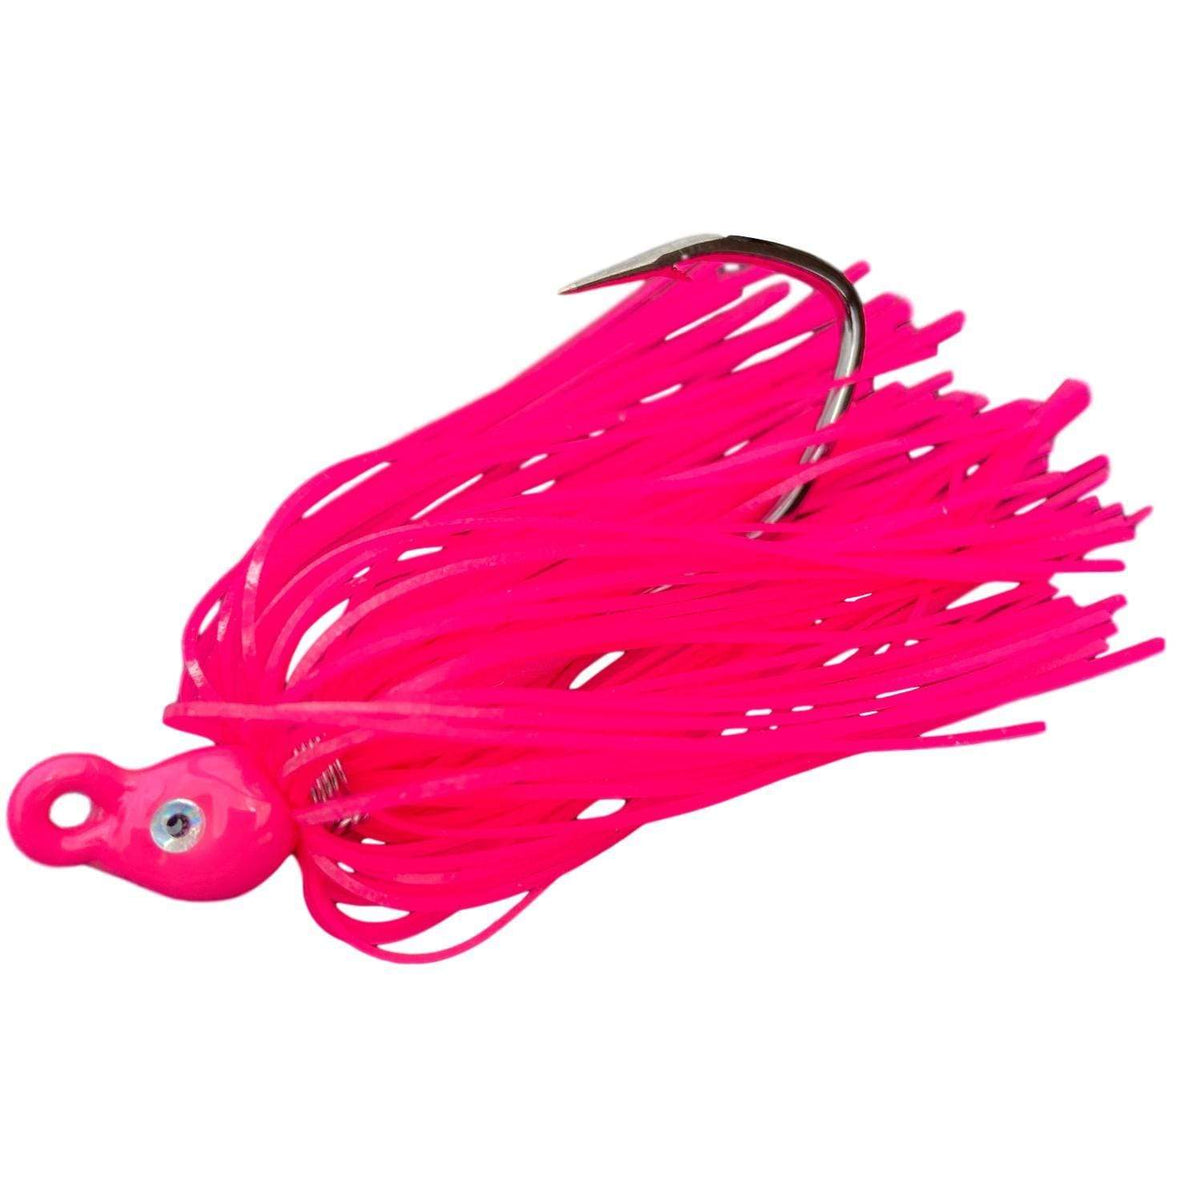 Backwater Custom Baits Poison Tail Jigs (1/4oz Teasers) Hot Pink